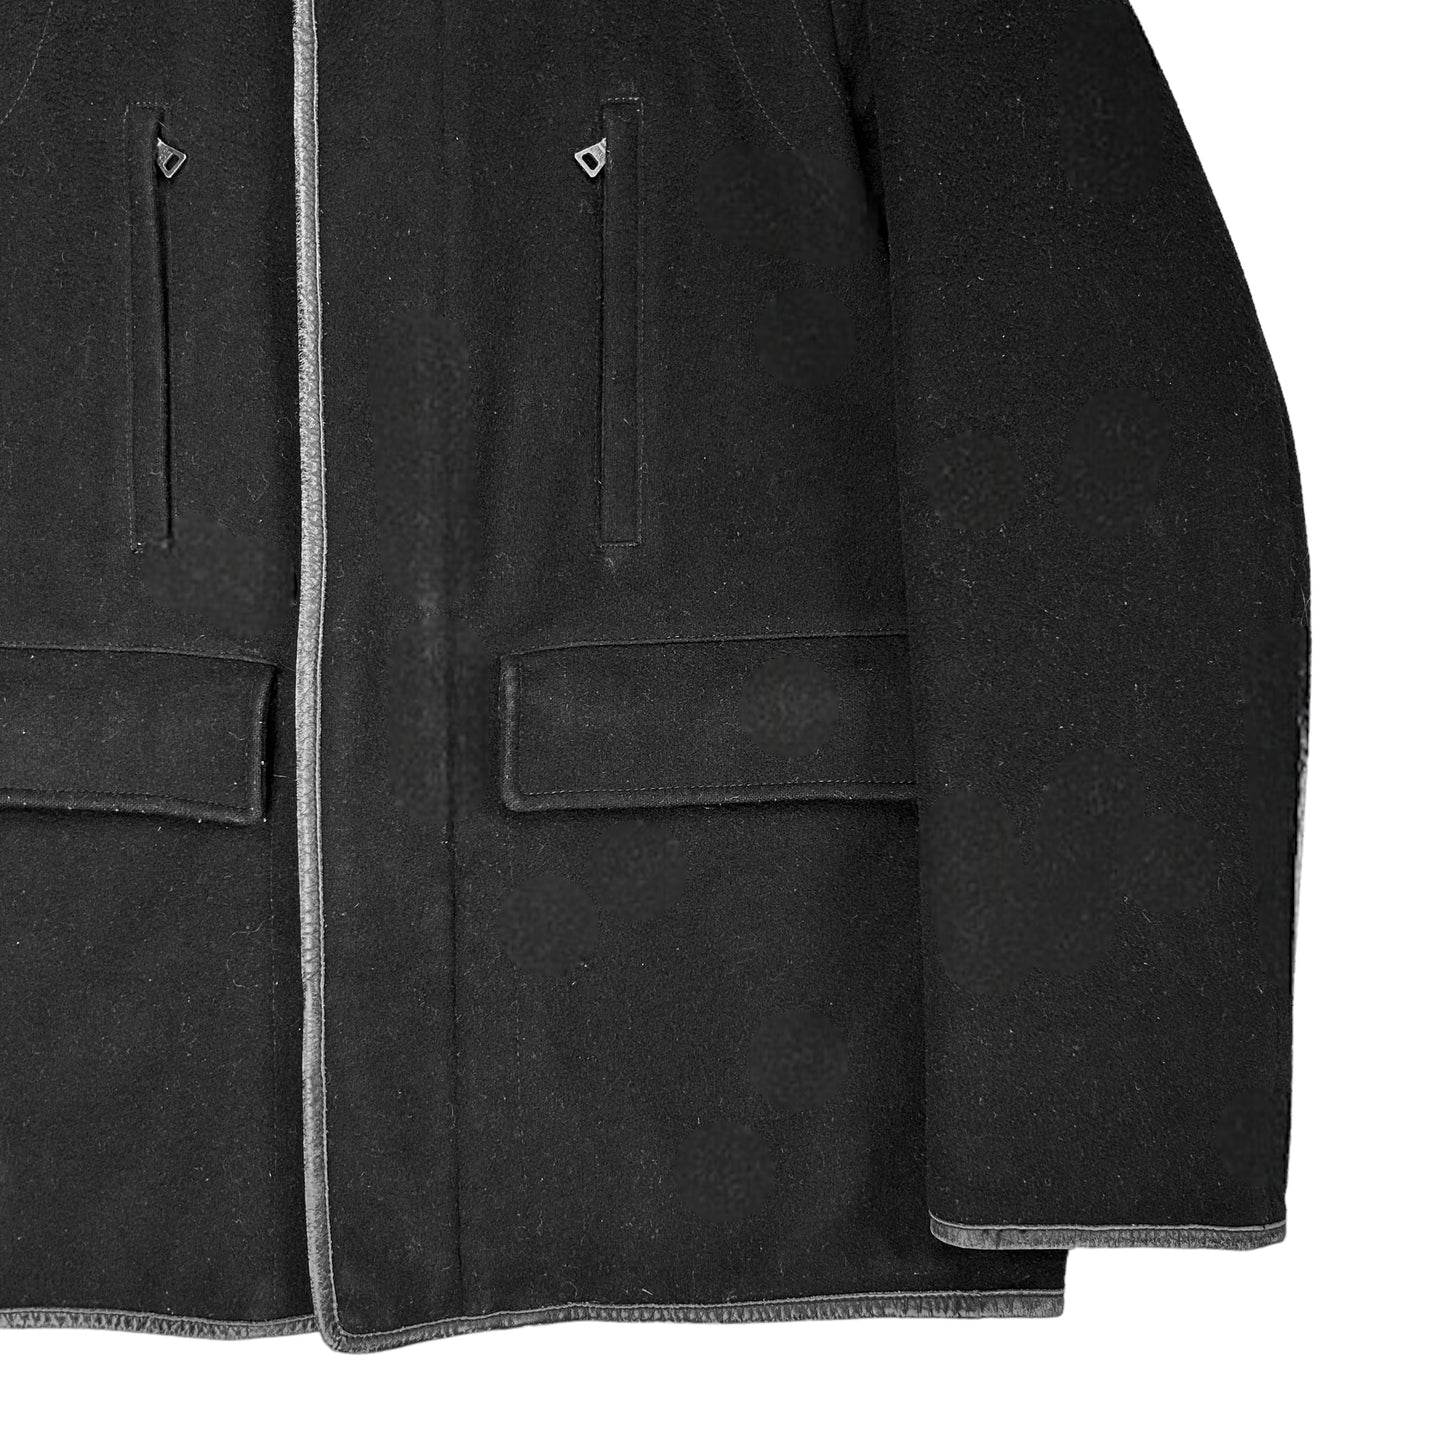 Prada Leather Trimmed Wool Jacket